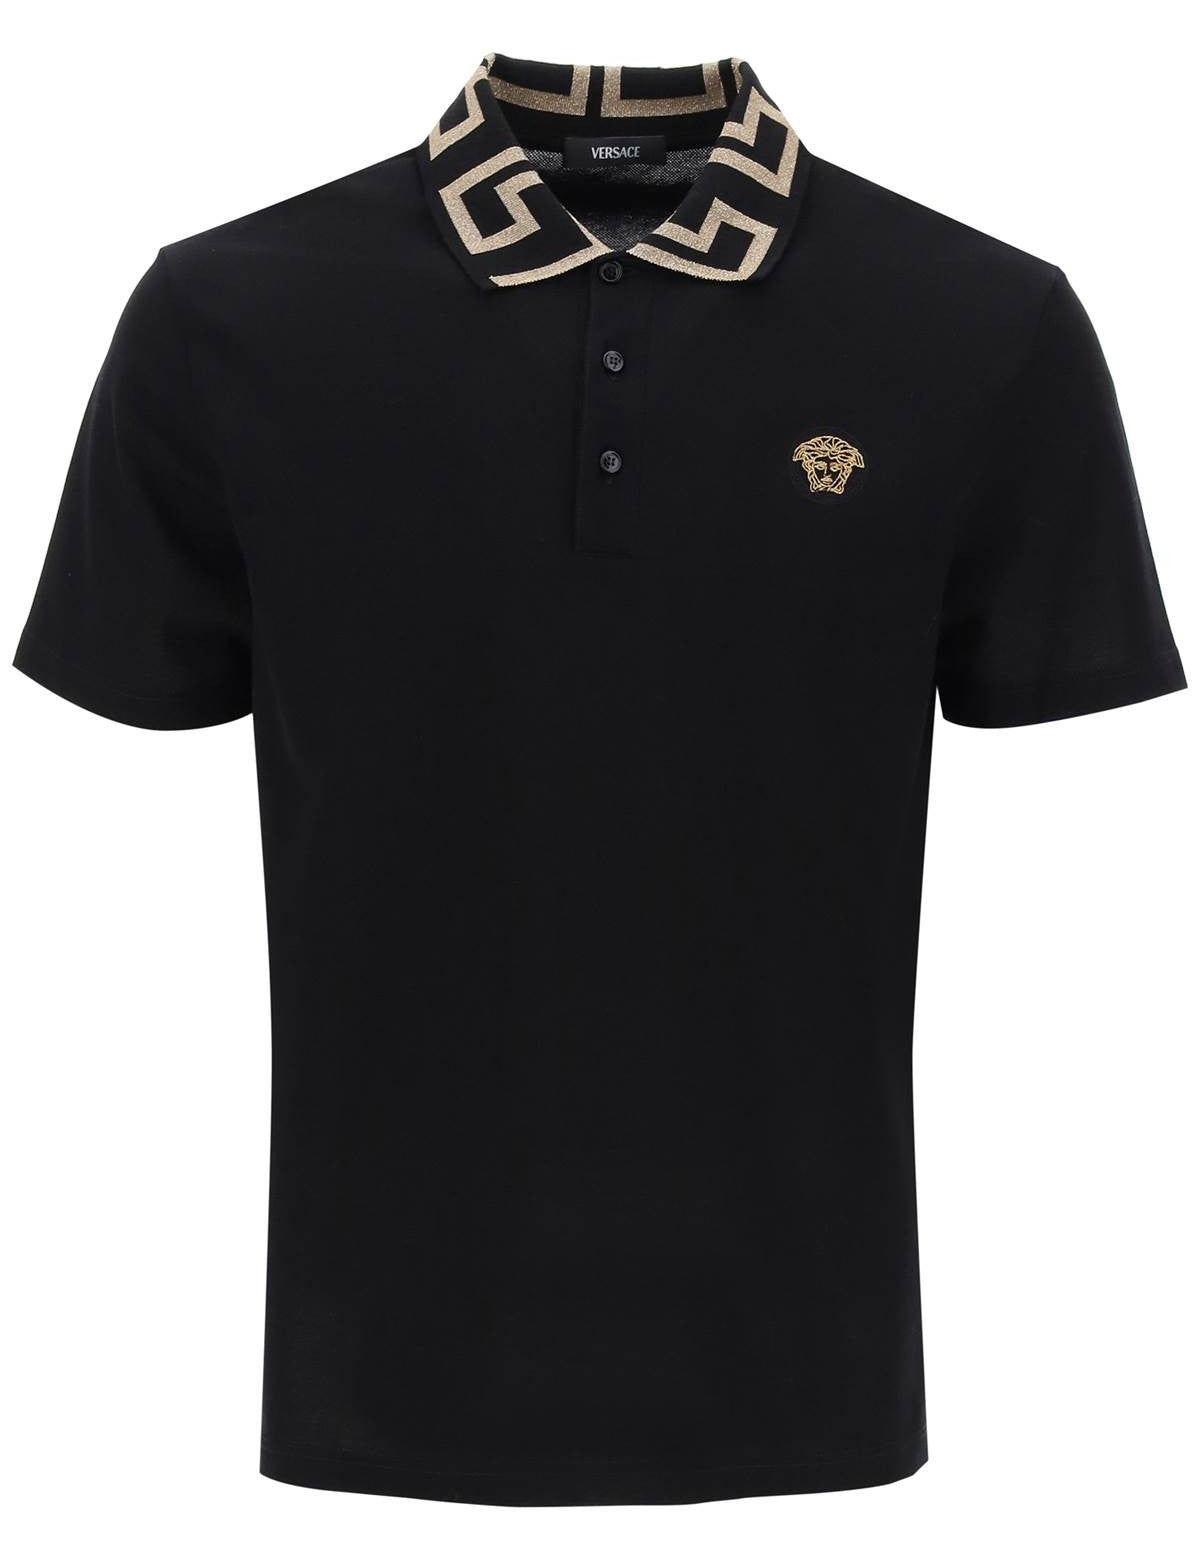 versace-polo-shirt-with-greca-collar_4e592141-1f33-496b-b35f-b62c5f0de9bd.jpg